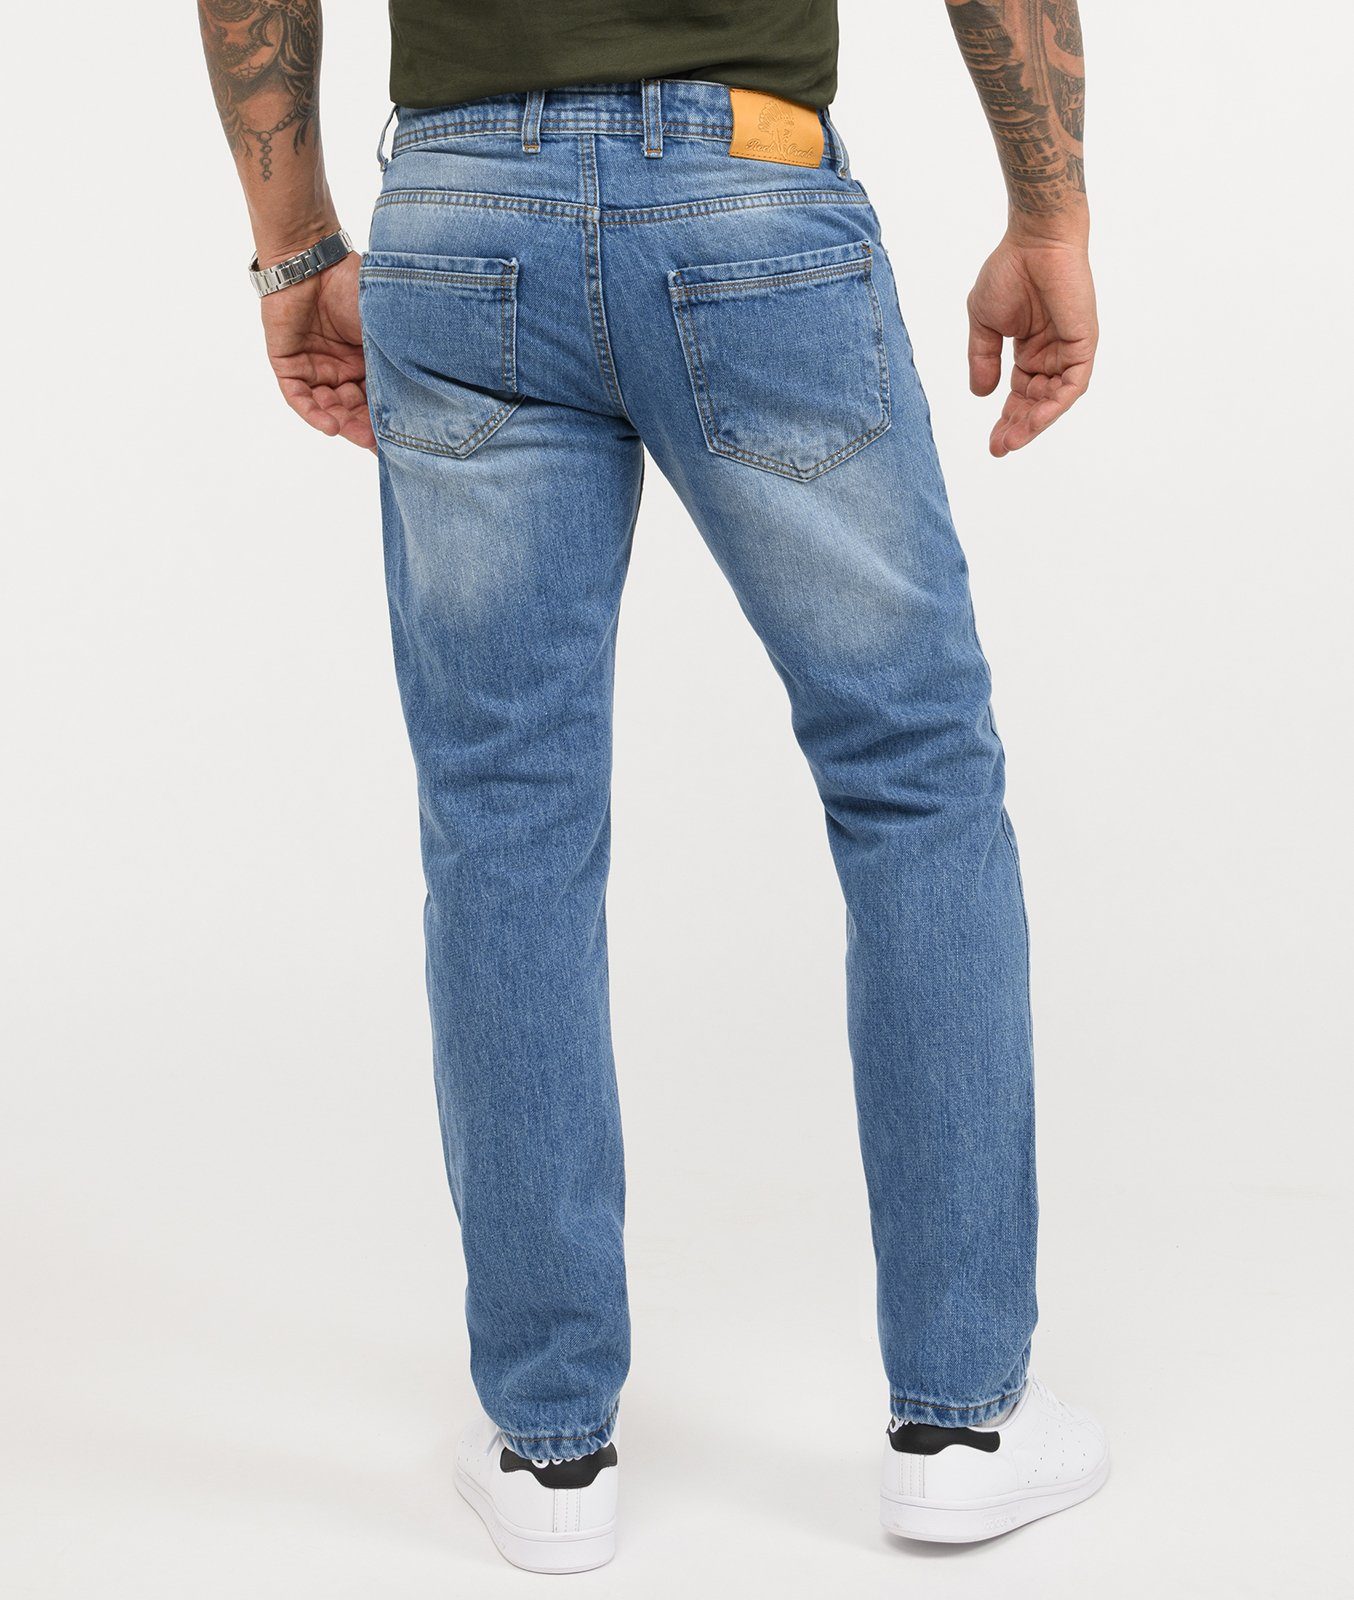 Stonewashed Herren Creek Rock Jeans Blau Straight-Jeans RC-3101